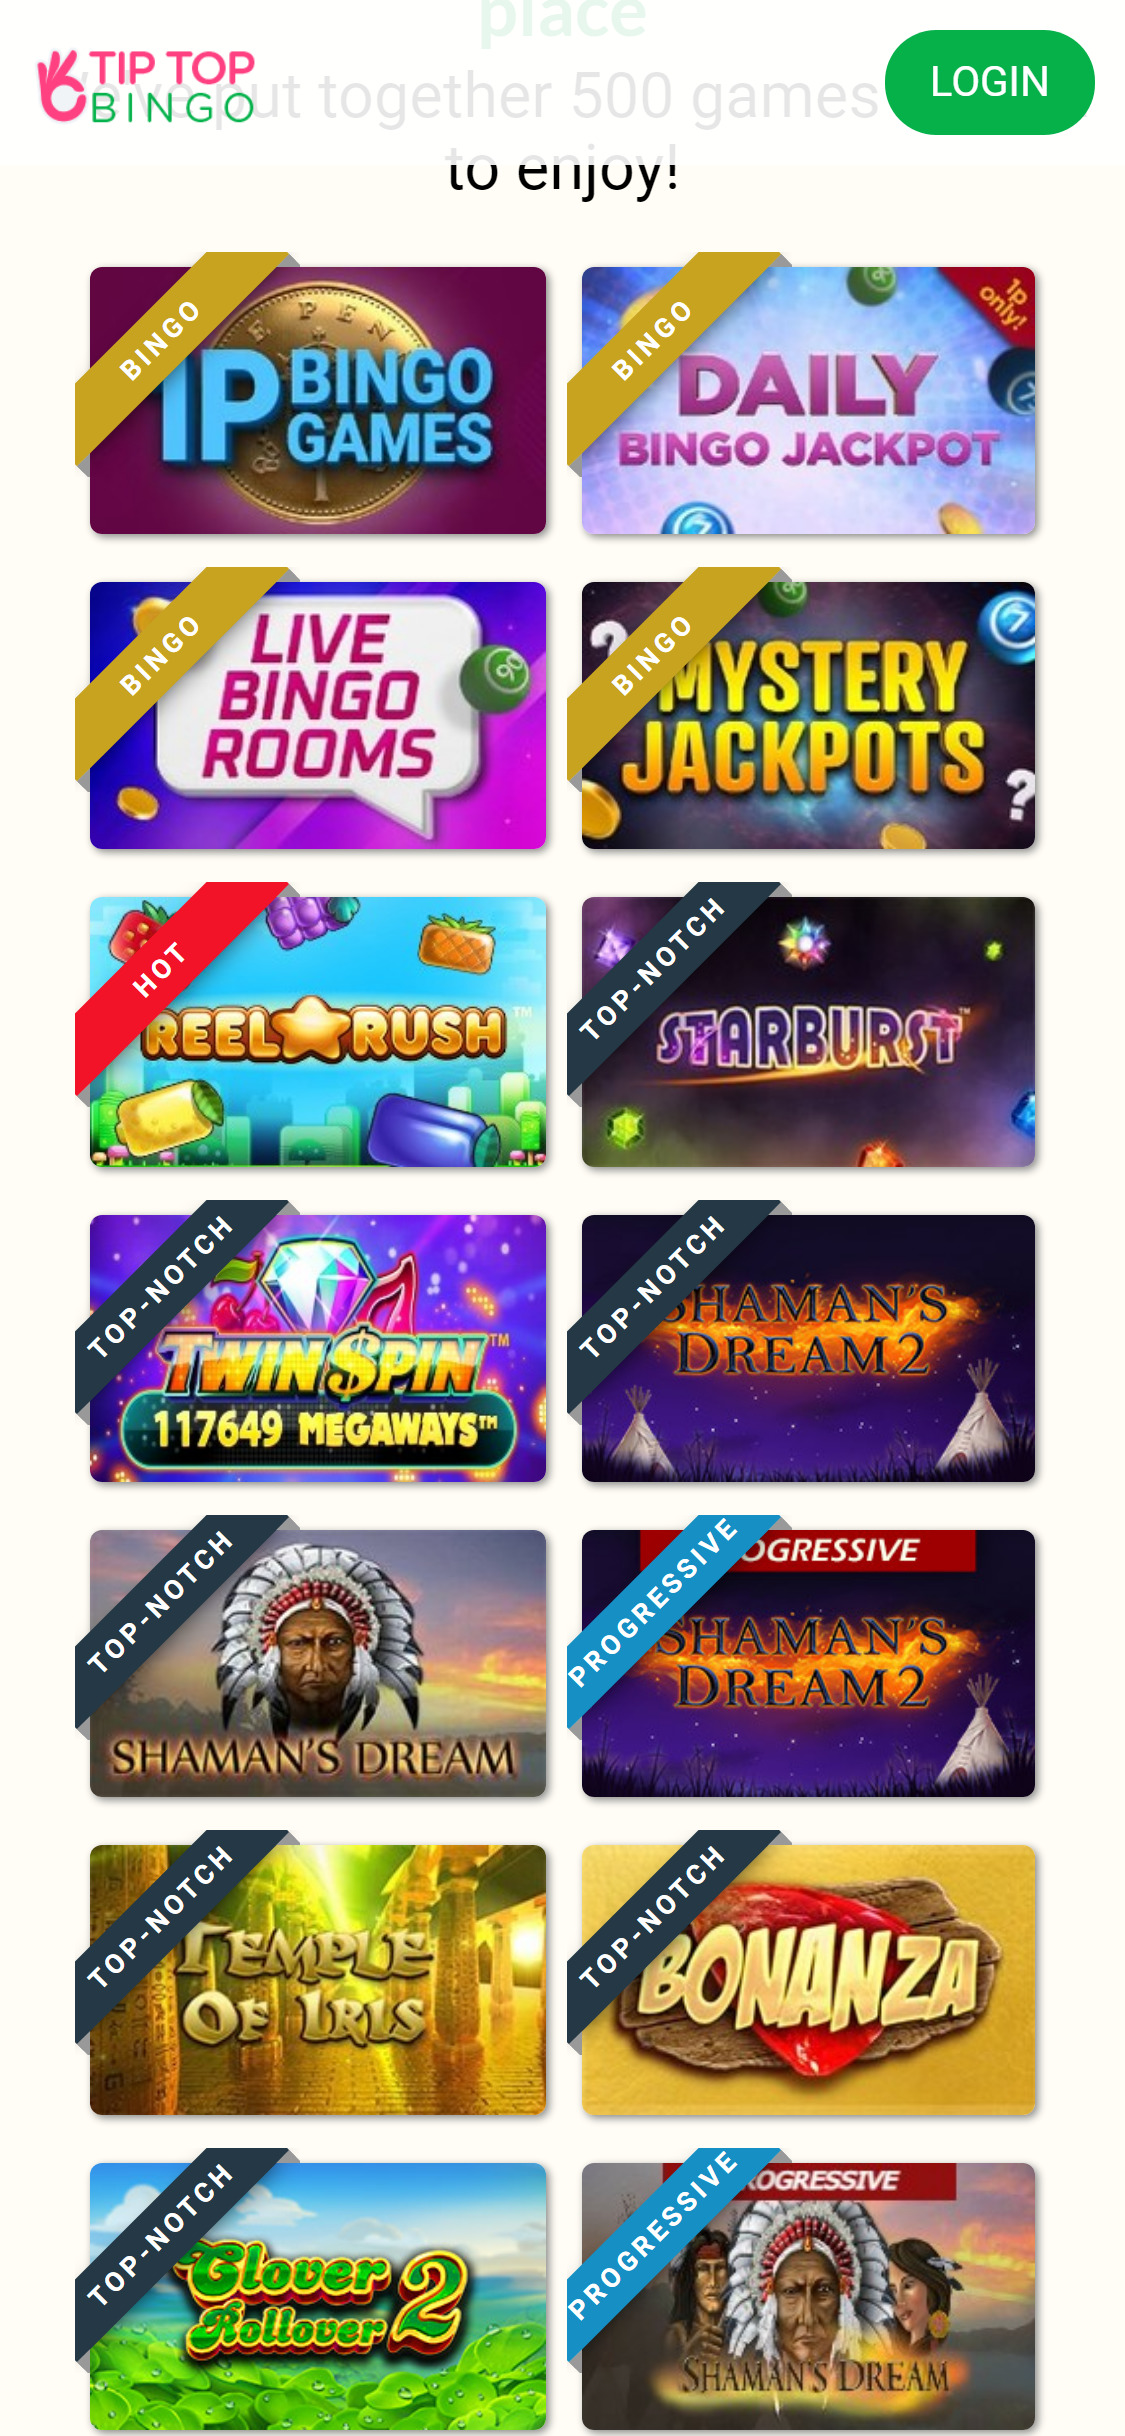 Tiptop Bingo Mobile Games Review